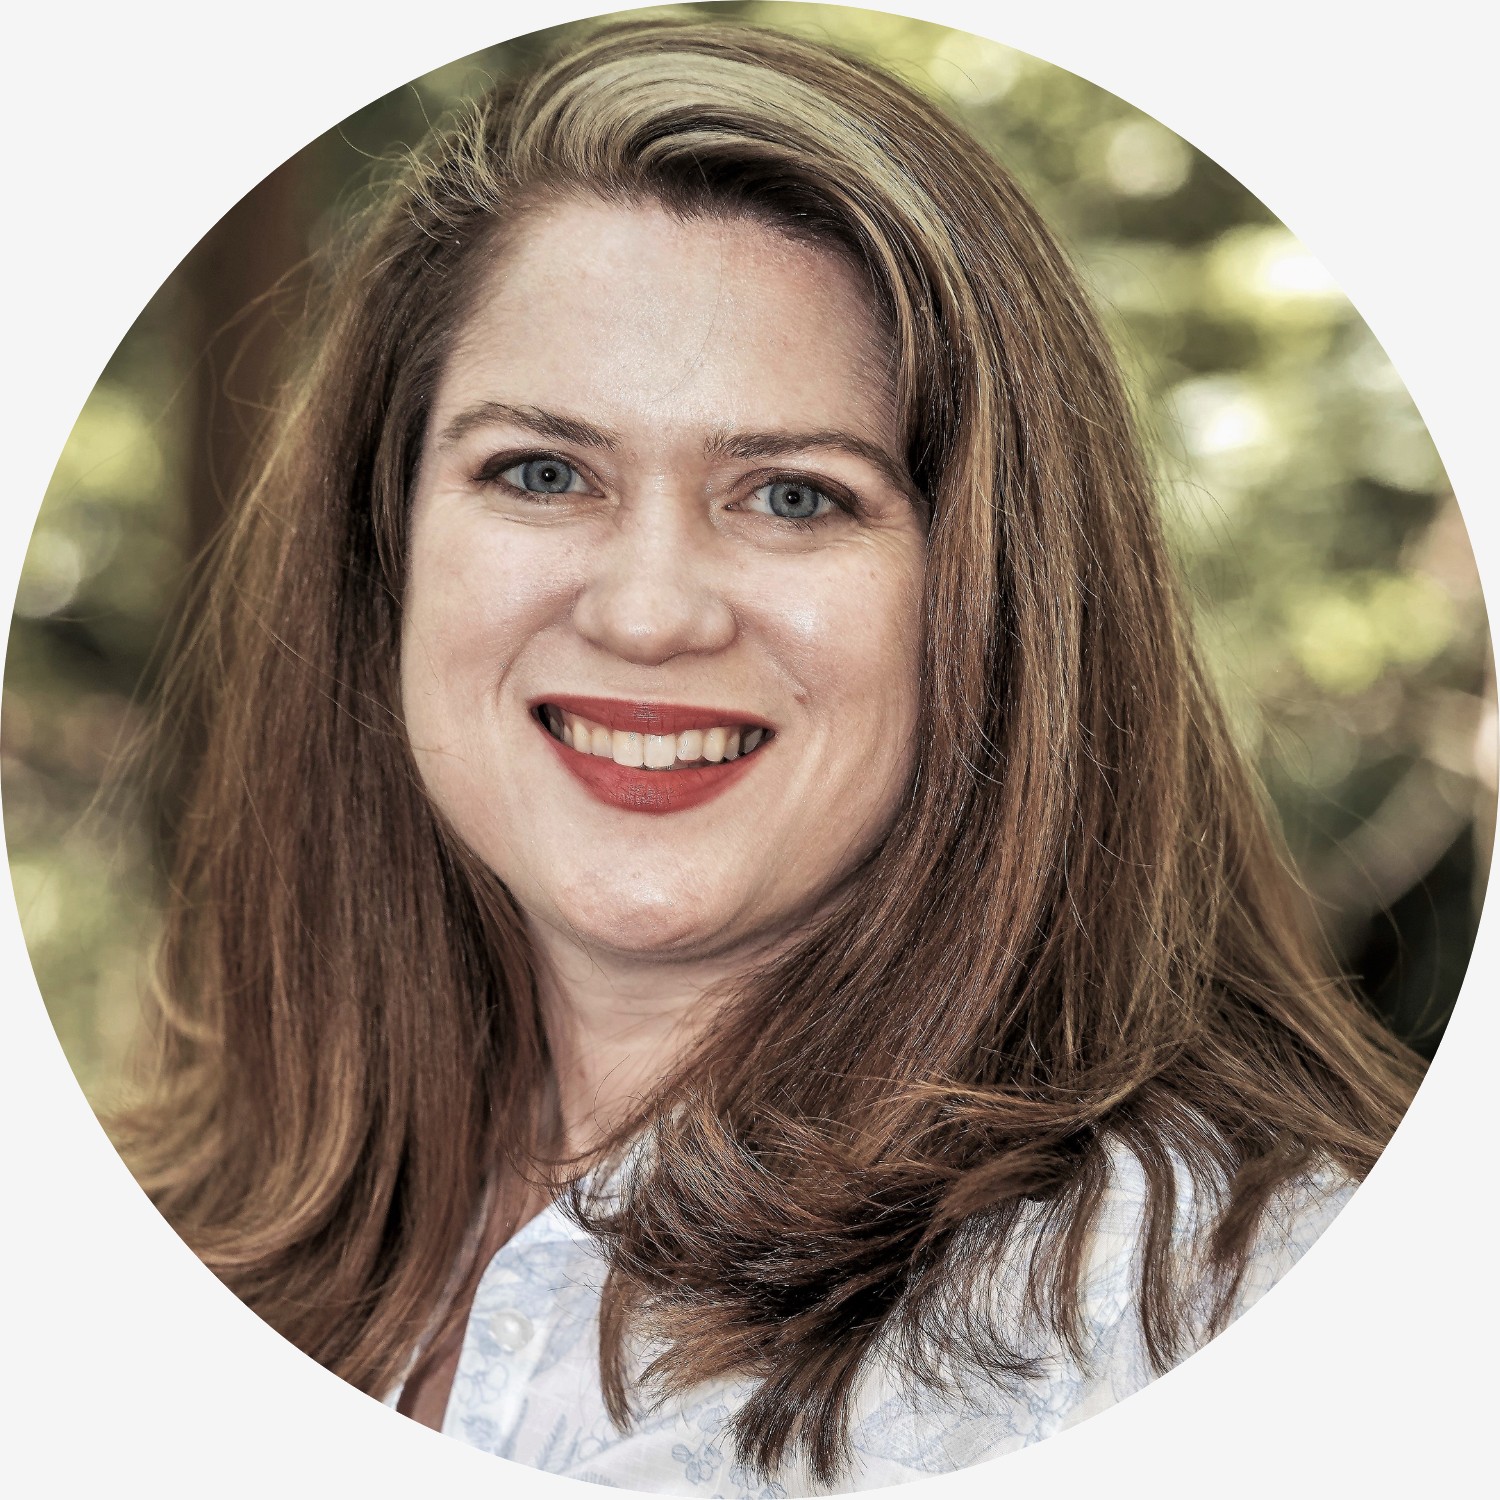 Rebecca Beatty – Operations director & team coordinator